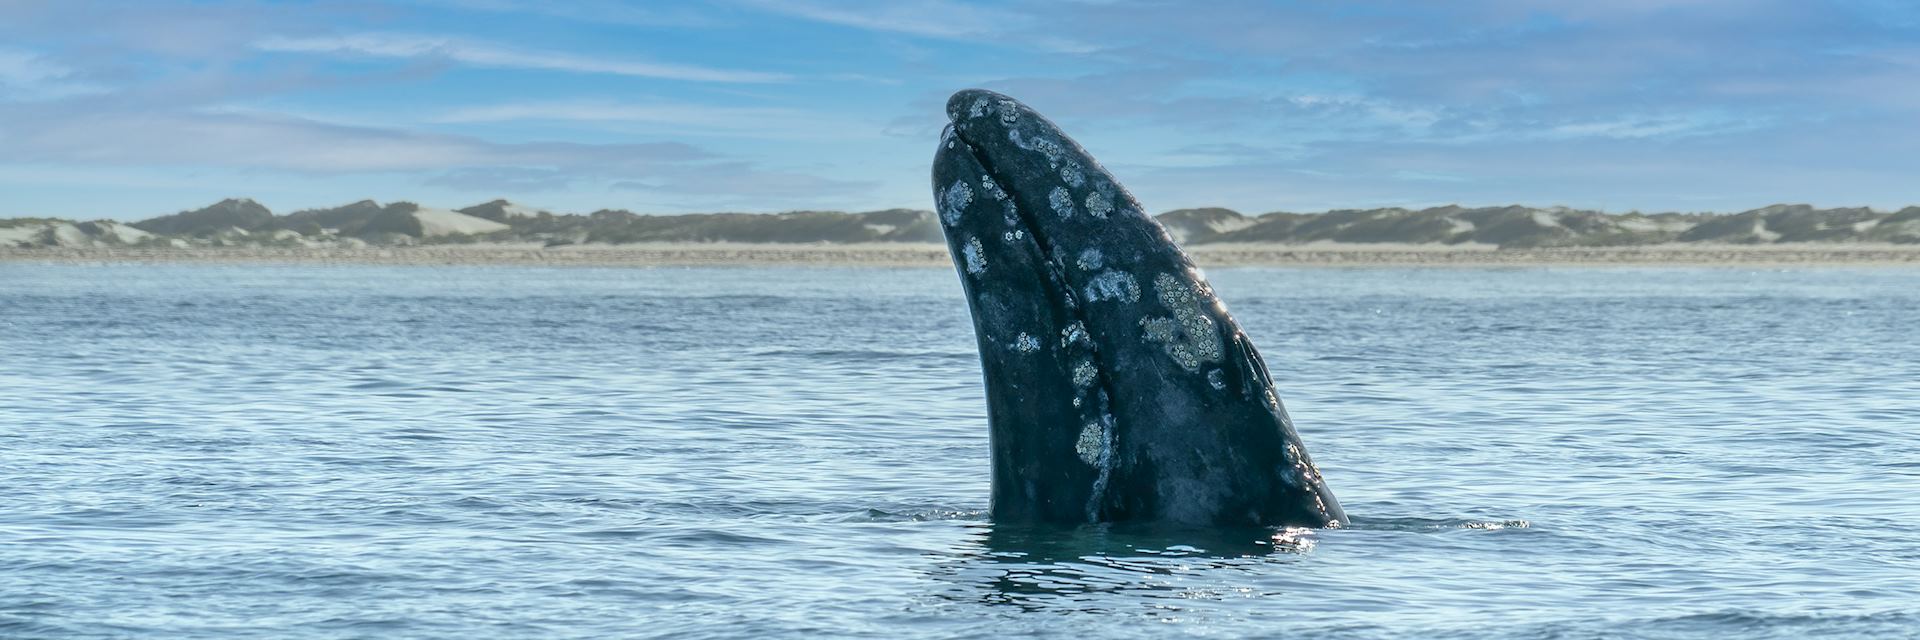 Grey whale, Magdalena Bay